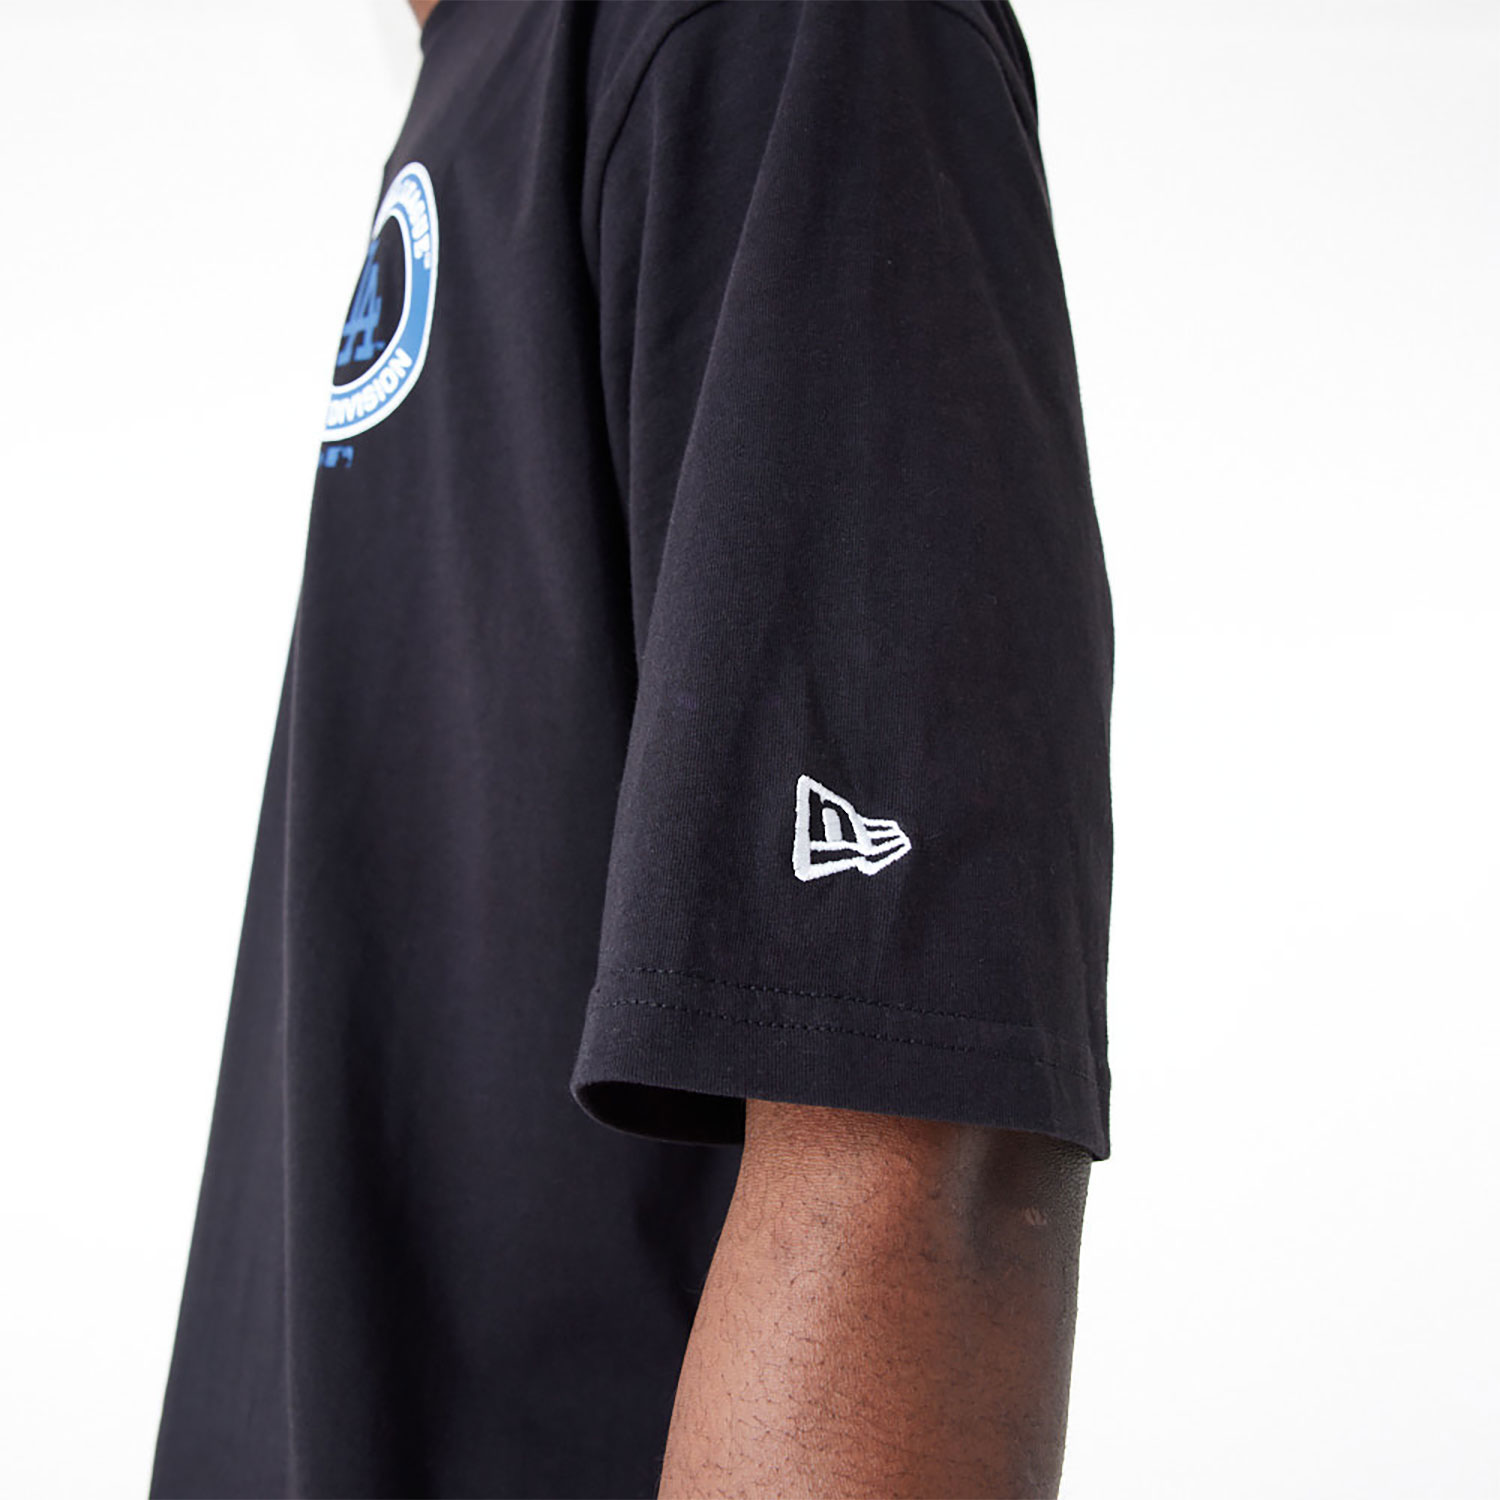 LA Dodgers MLB Player Graphic Black Oversized T-Shirt